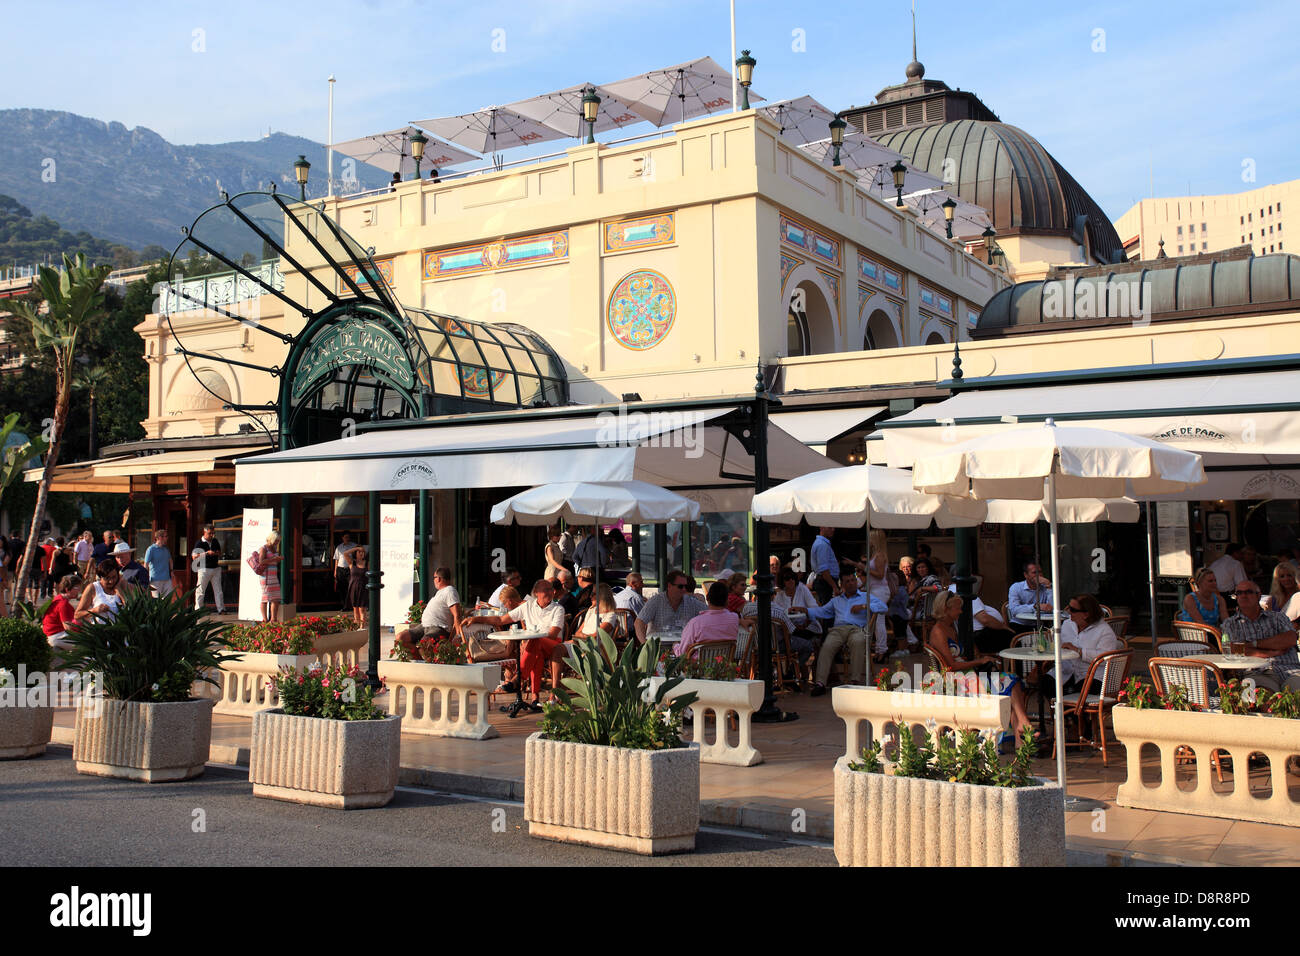 The Place du Casino and the Café de Paris in Monaco, Principality of Monaco Stock Photo